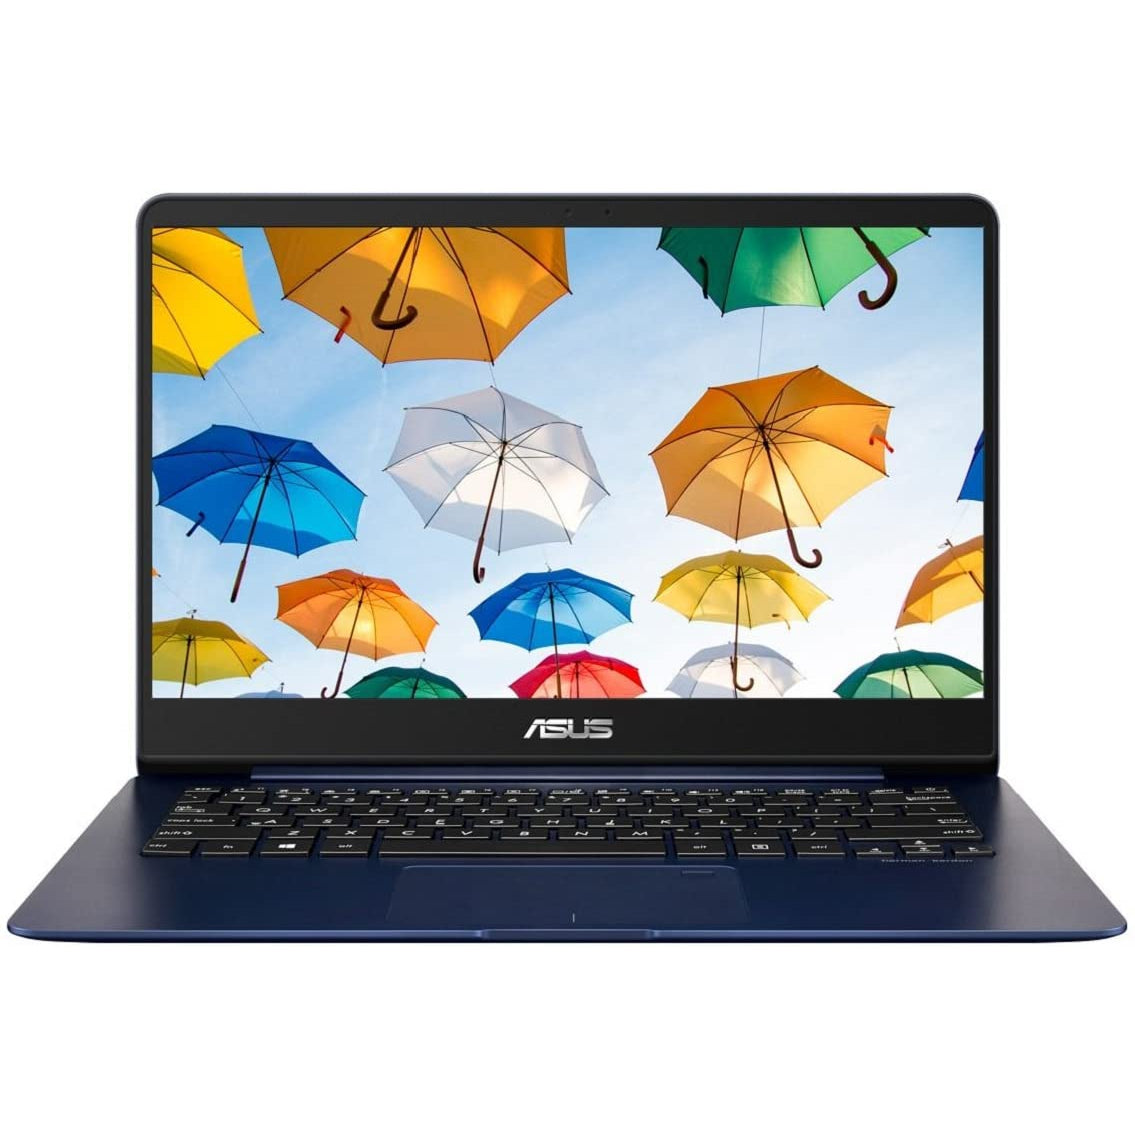 ASUS ZenBook UX430UA-GV414T 14 Inch Full HD Laptop - Intel Core i5-8250U, 8GB RAM, 256GB SSD, Harman Kardon Speakers - Blue Metal